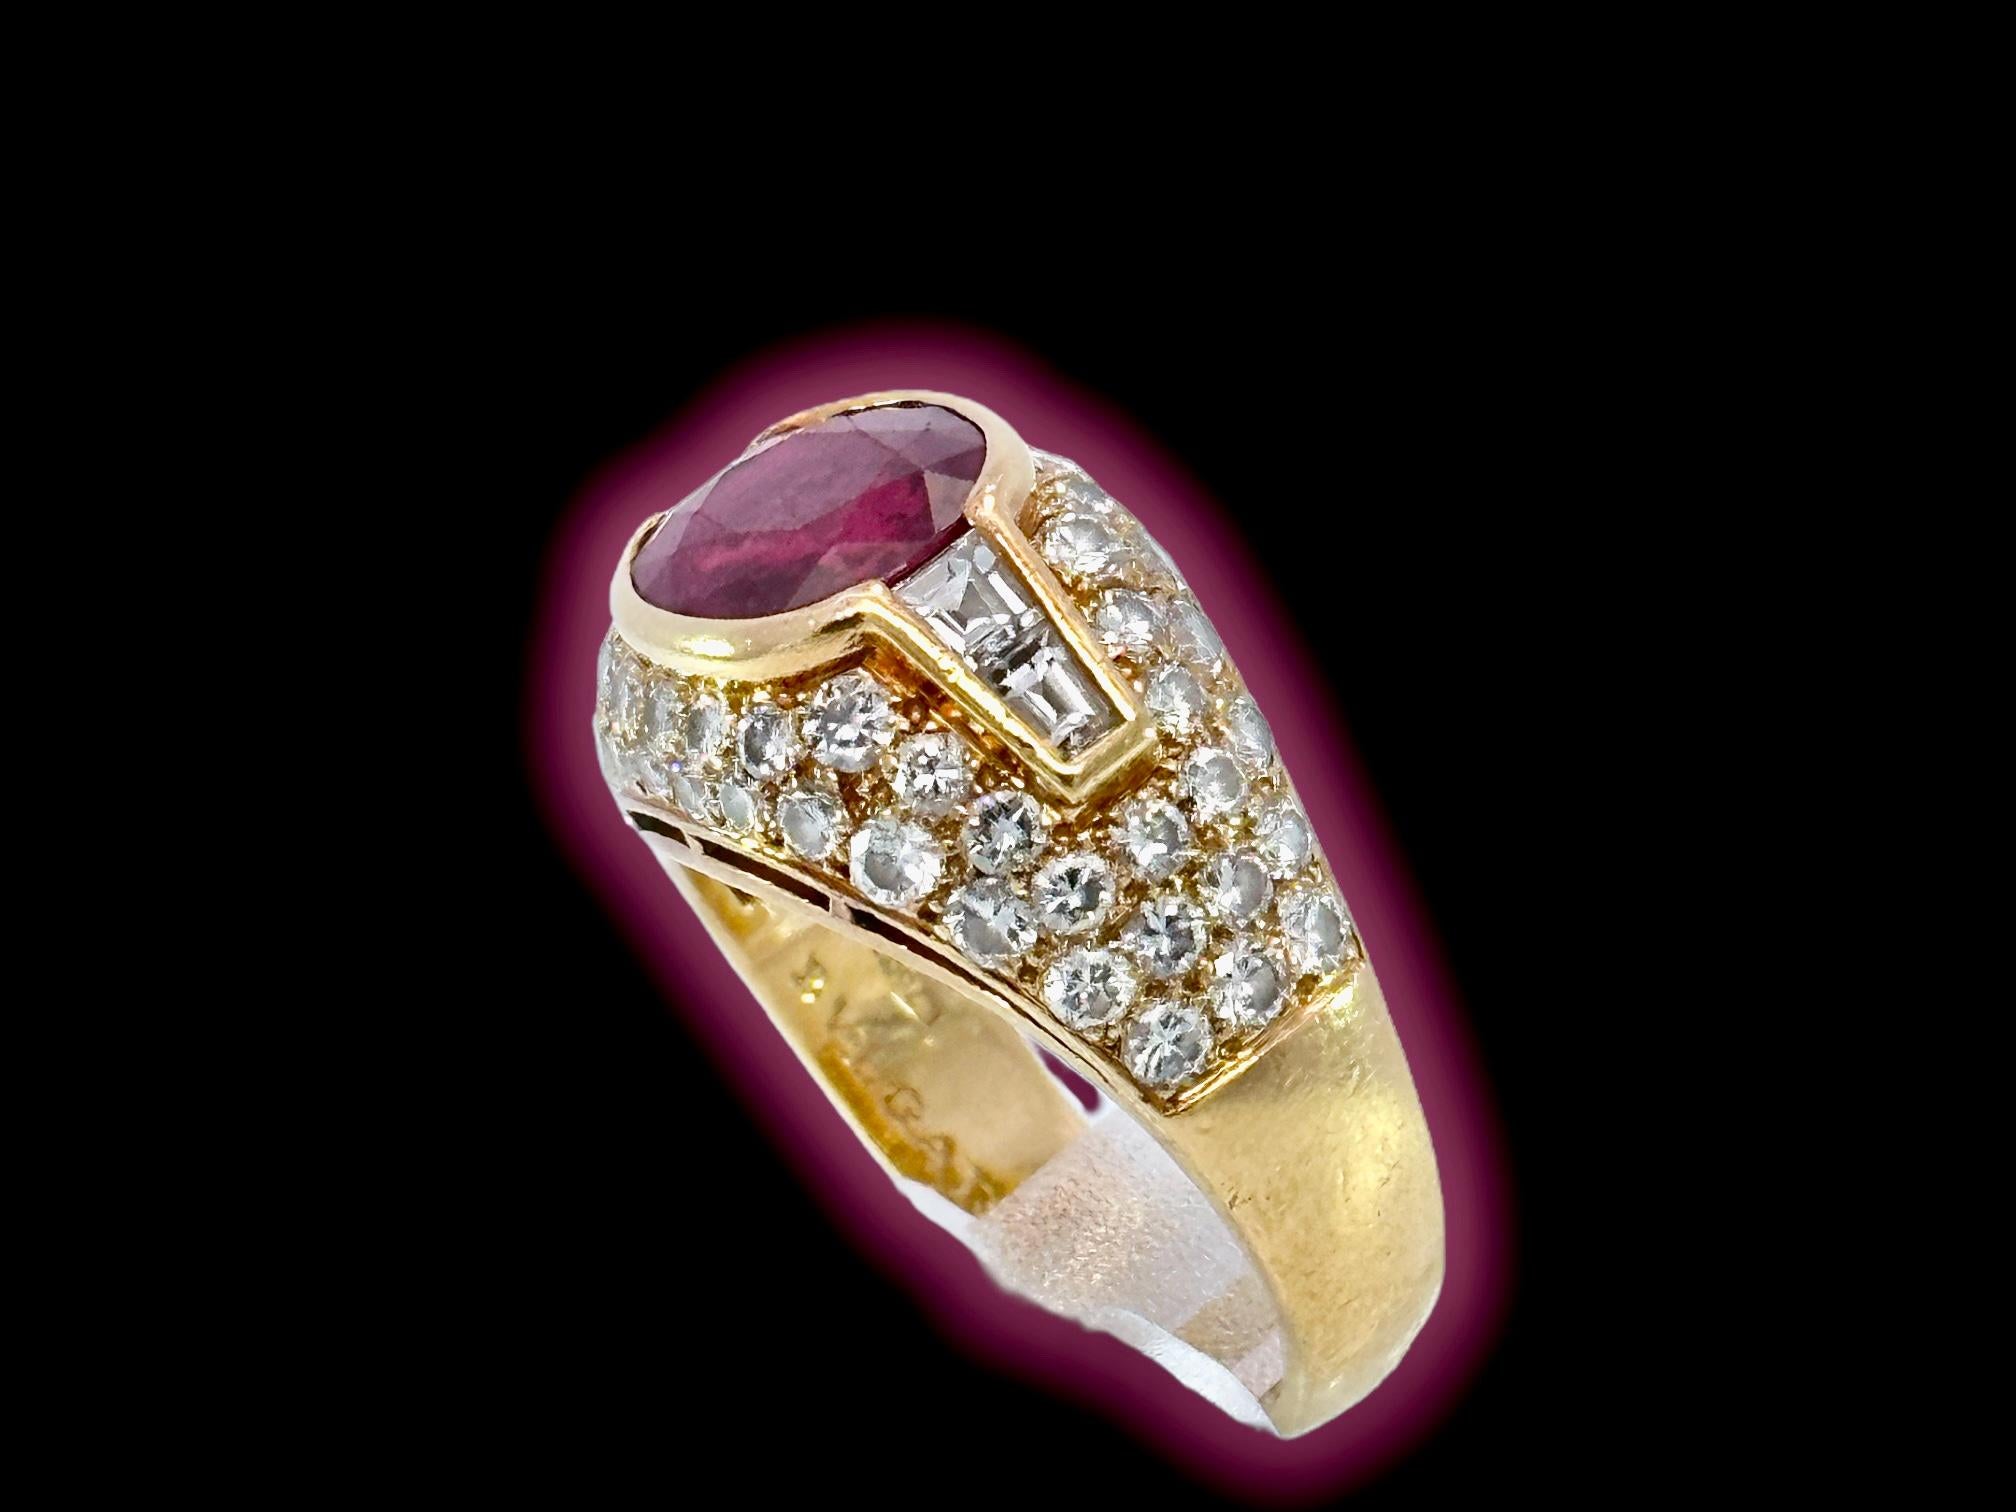 Bvlgari Trombino 18kt Yellow Gold Ring 2.09ct Ruby & Diamonds With GRS Cert For Sale 3